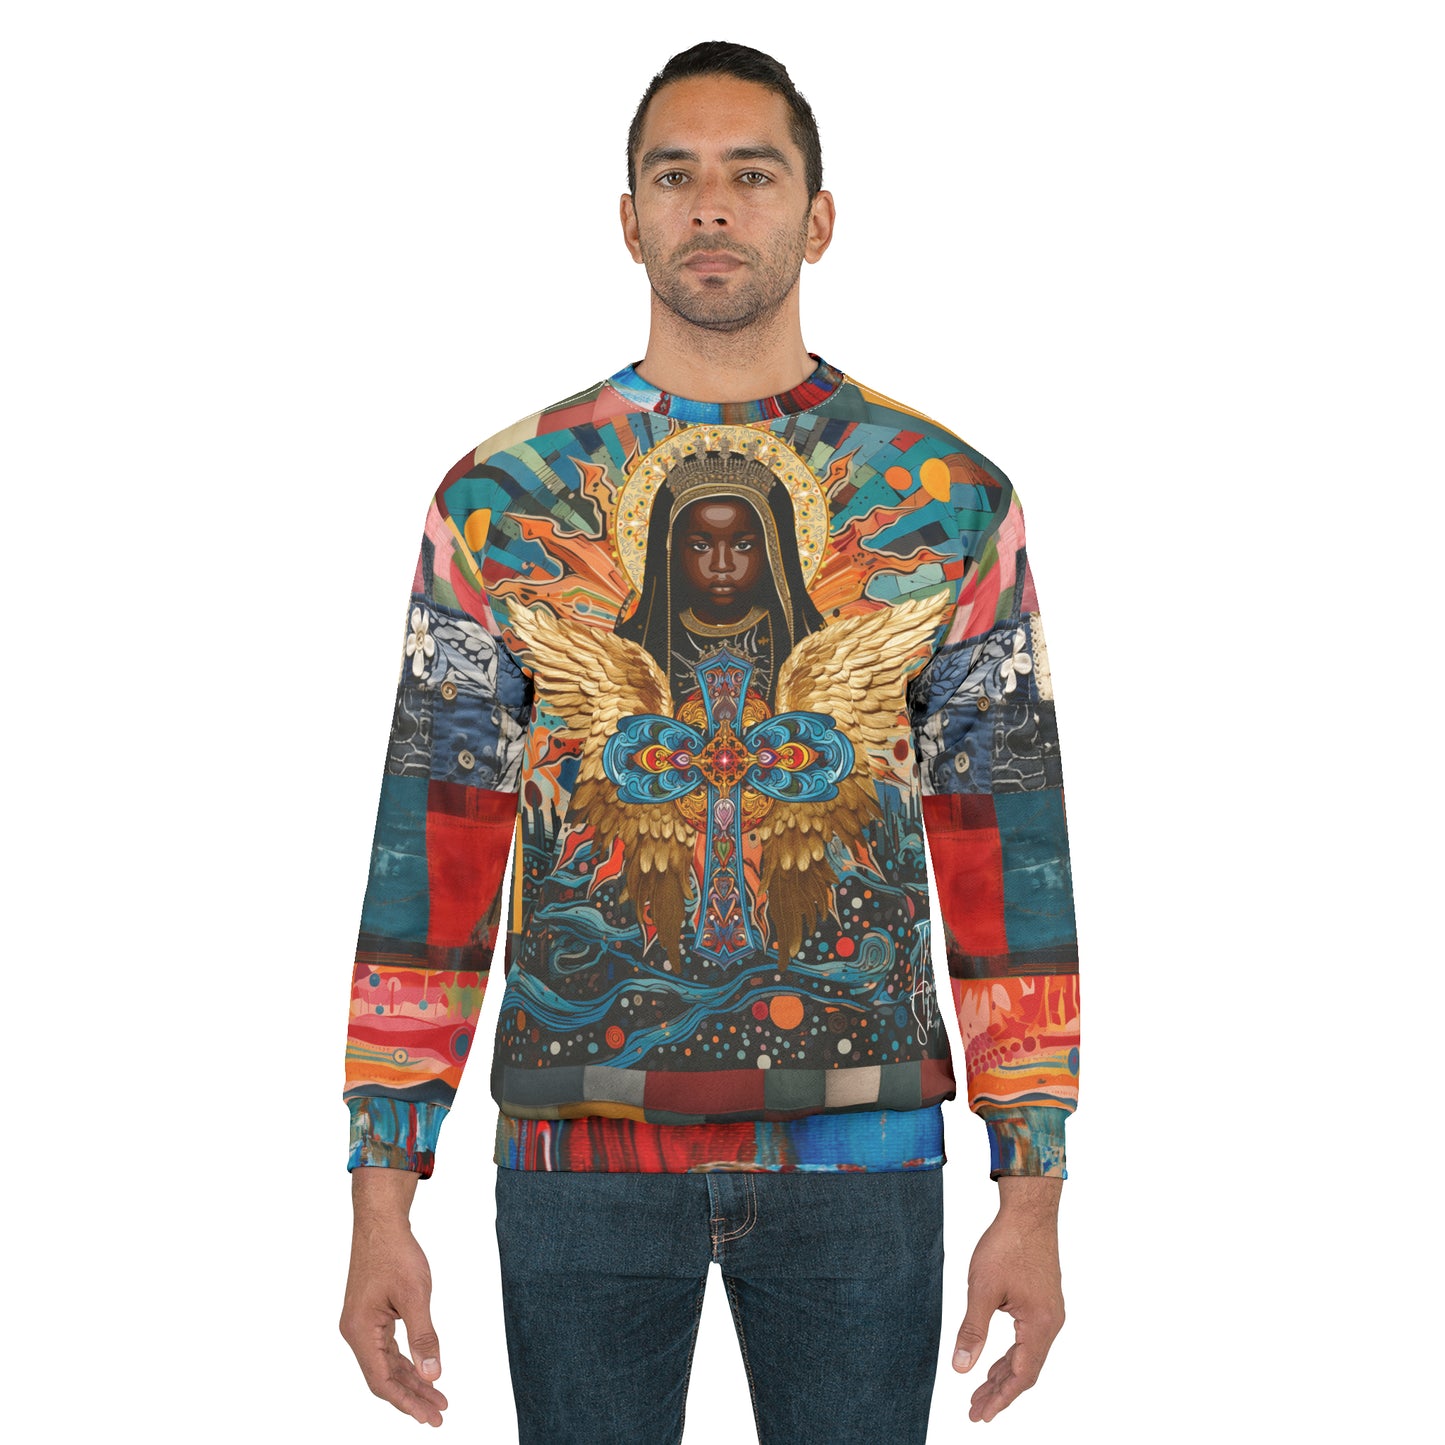 The Second Coming of Christ Unisex Sweatshirt